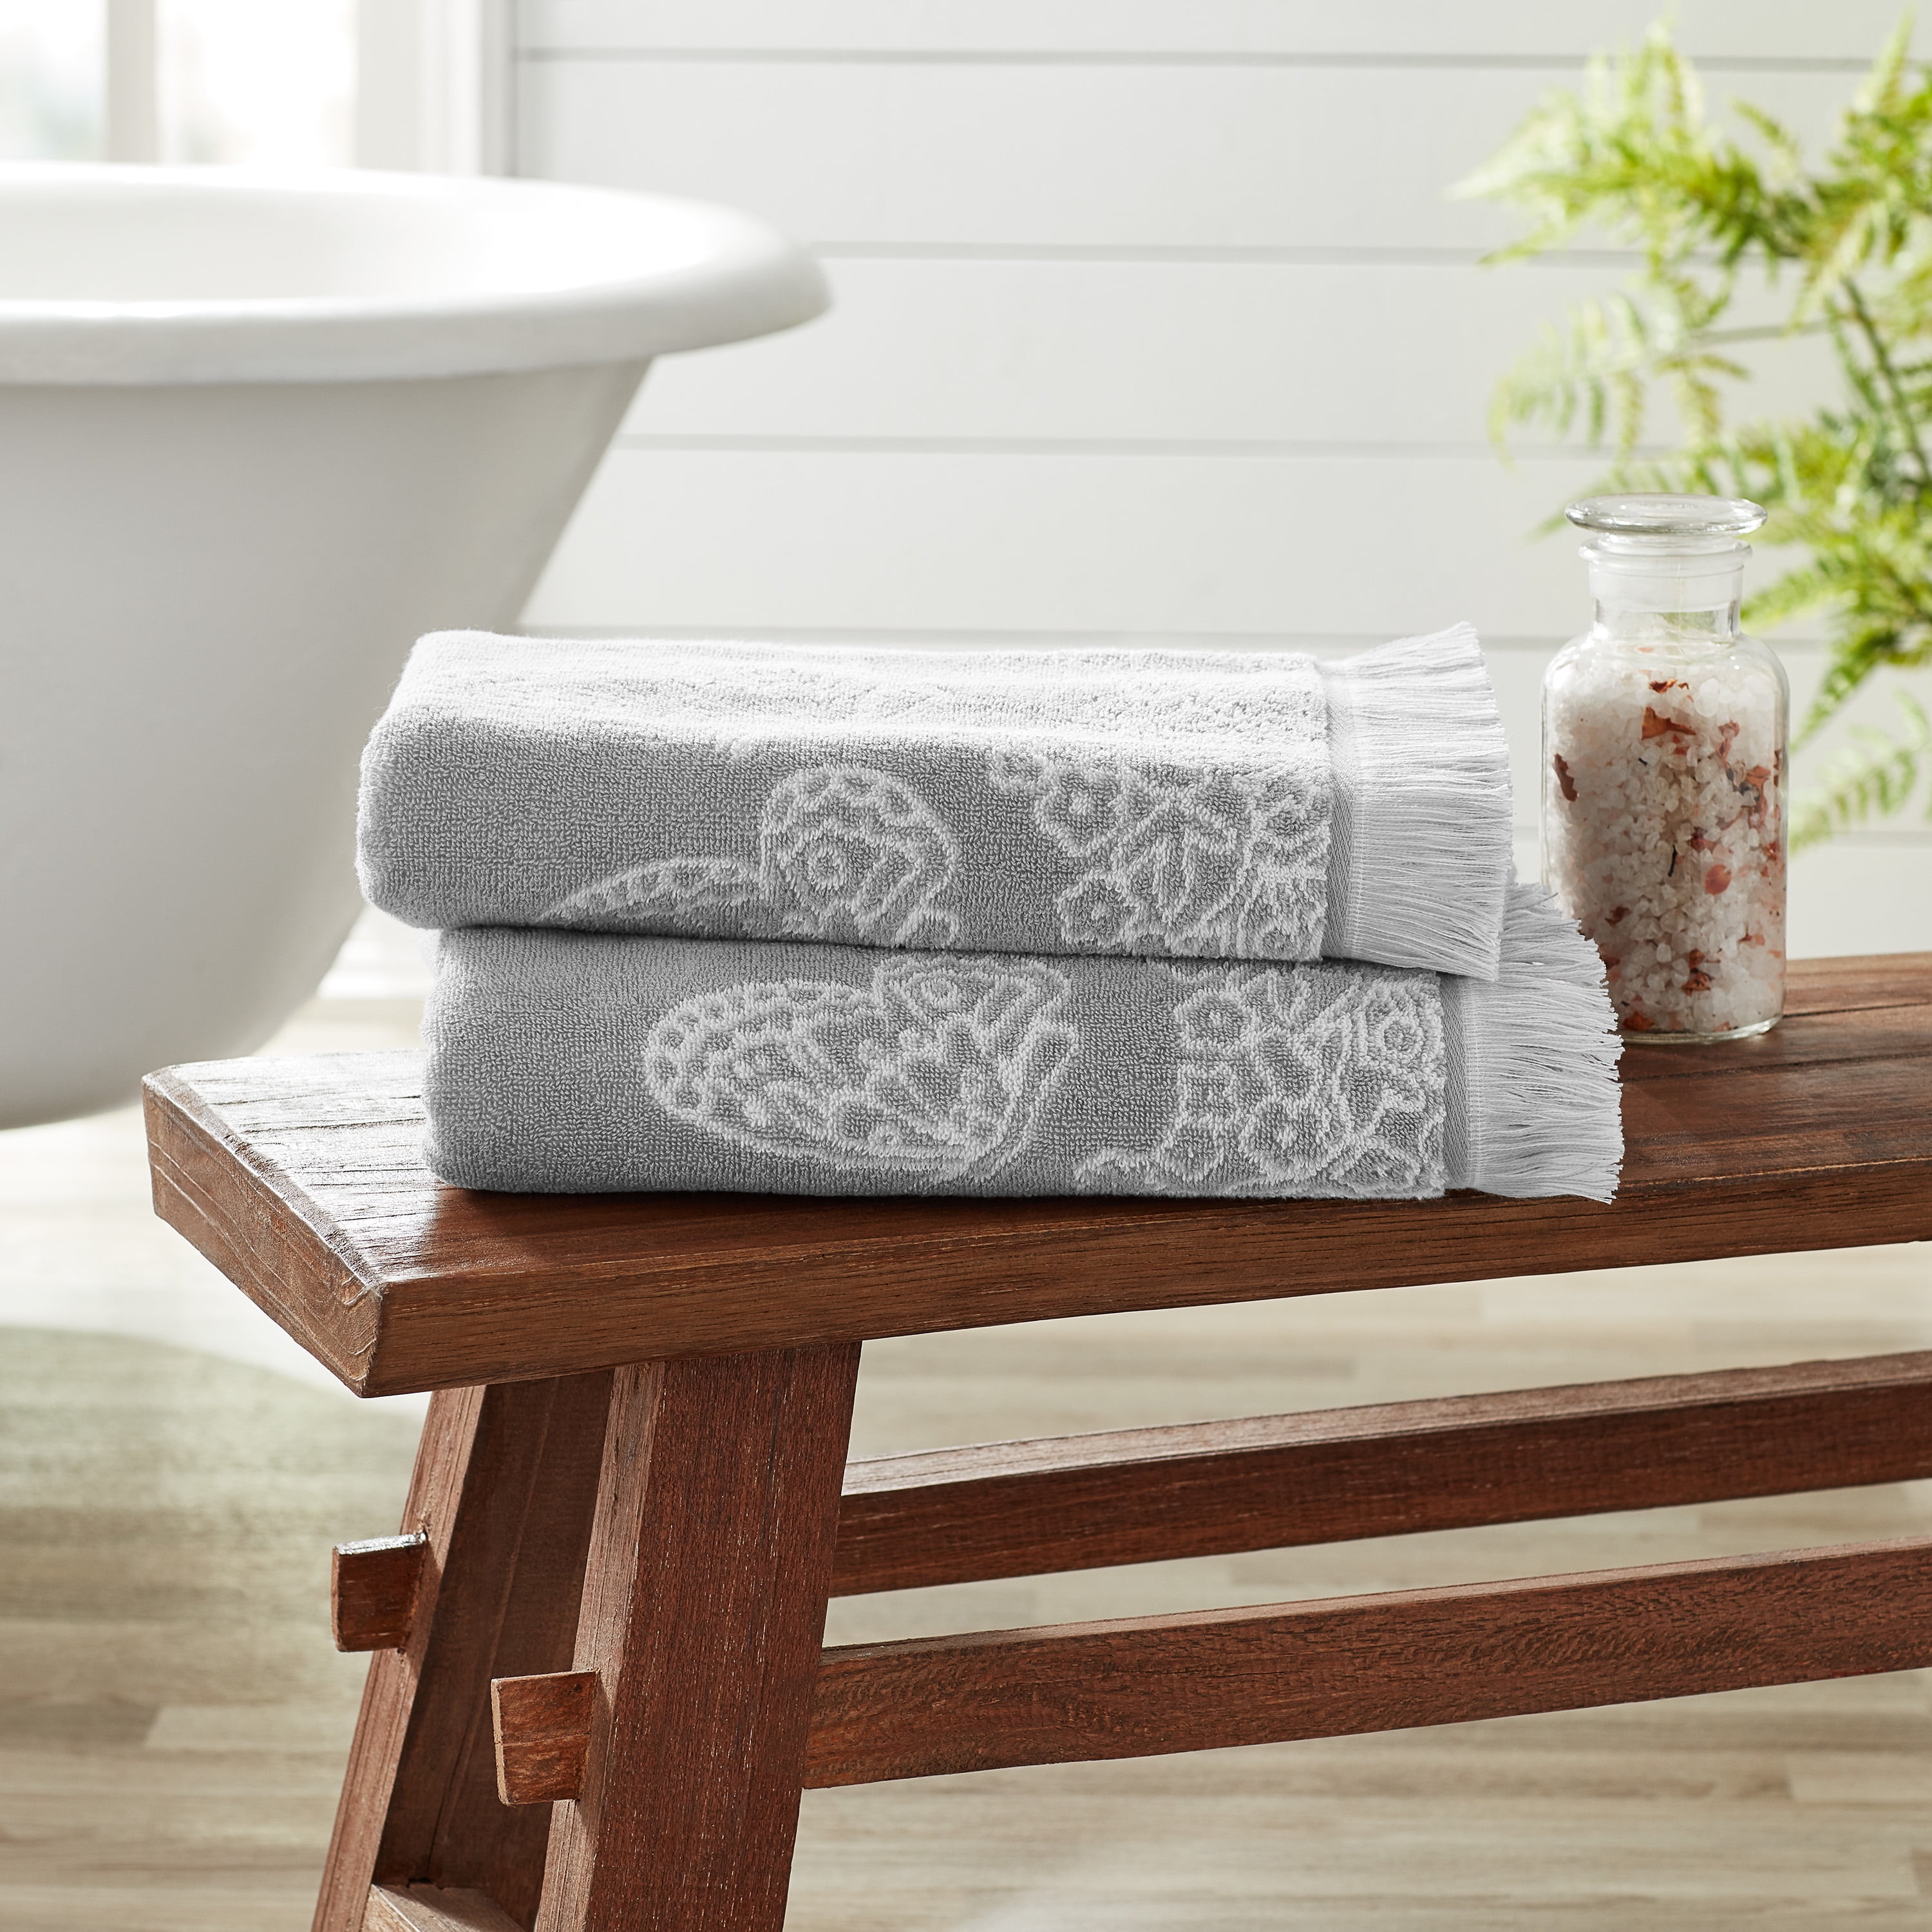 The Pioneer Woman Ditsy Dot 4-Piece Cotton Bath & Hand Towel Set, Size: Bath - 27 inchx52 inch| Hand - 16 inchx28 inch